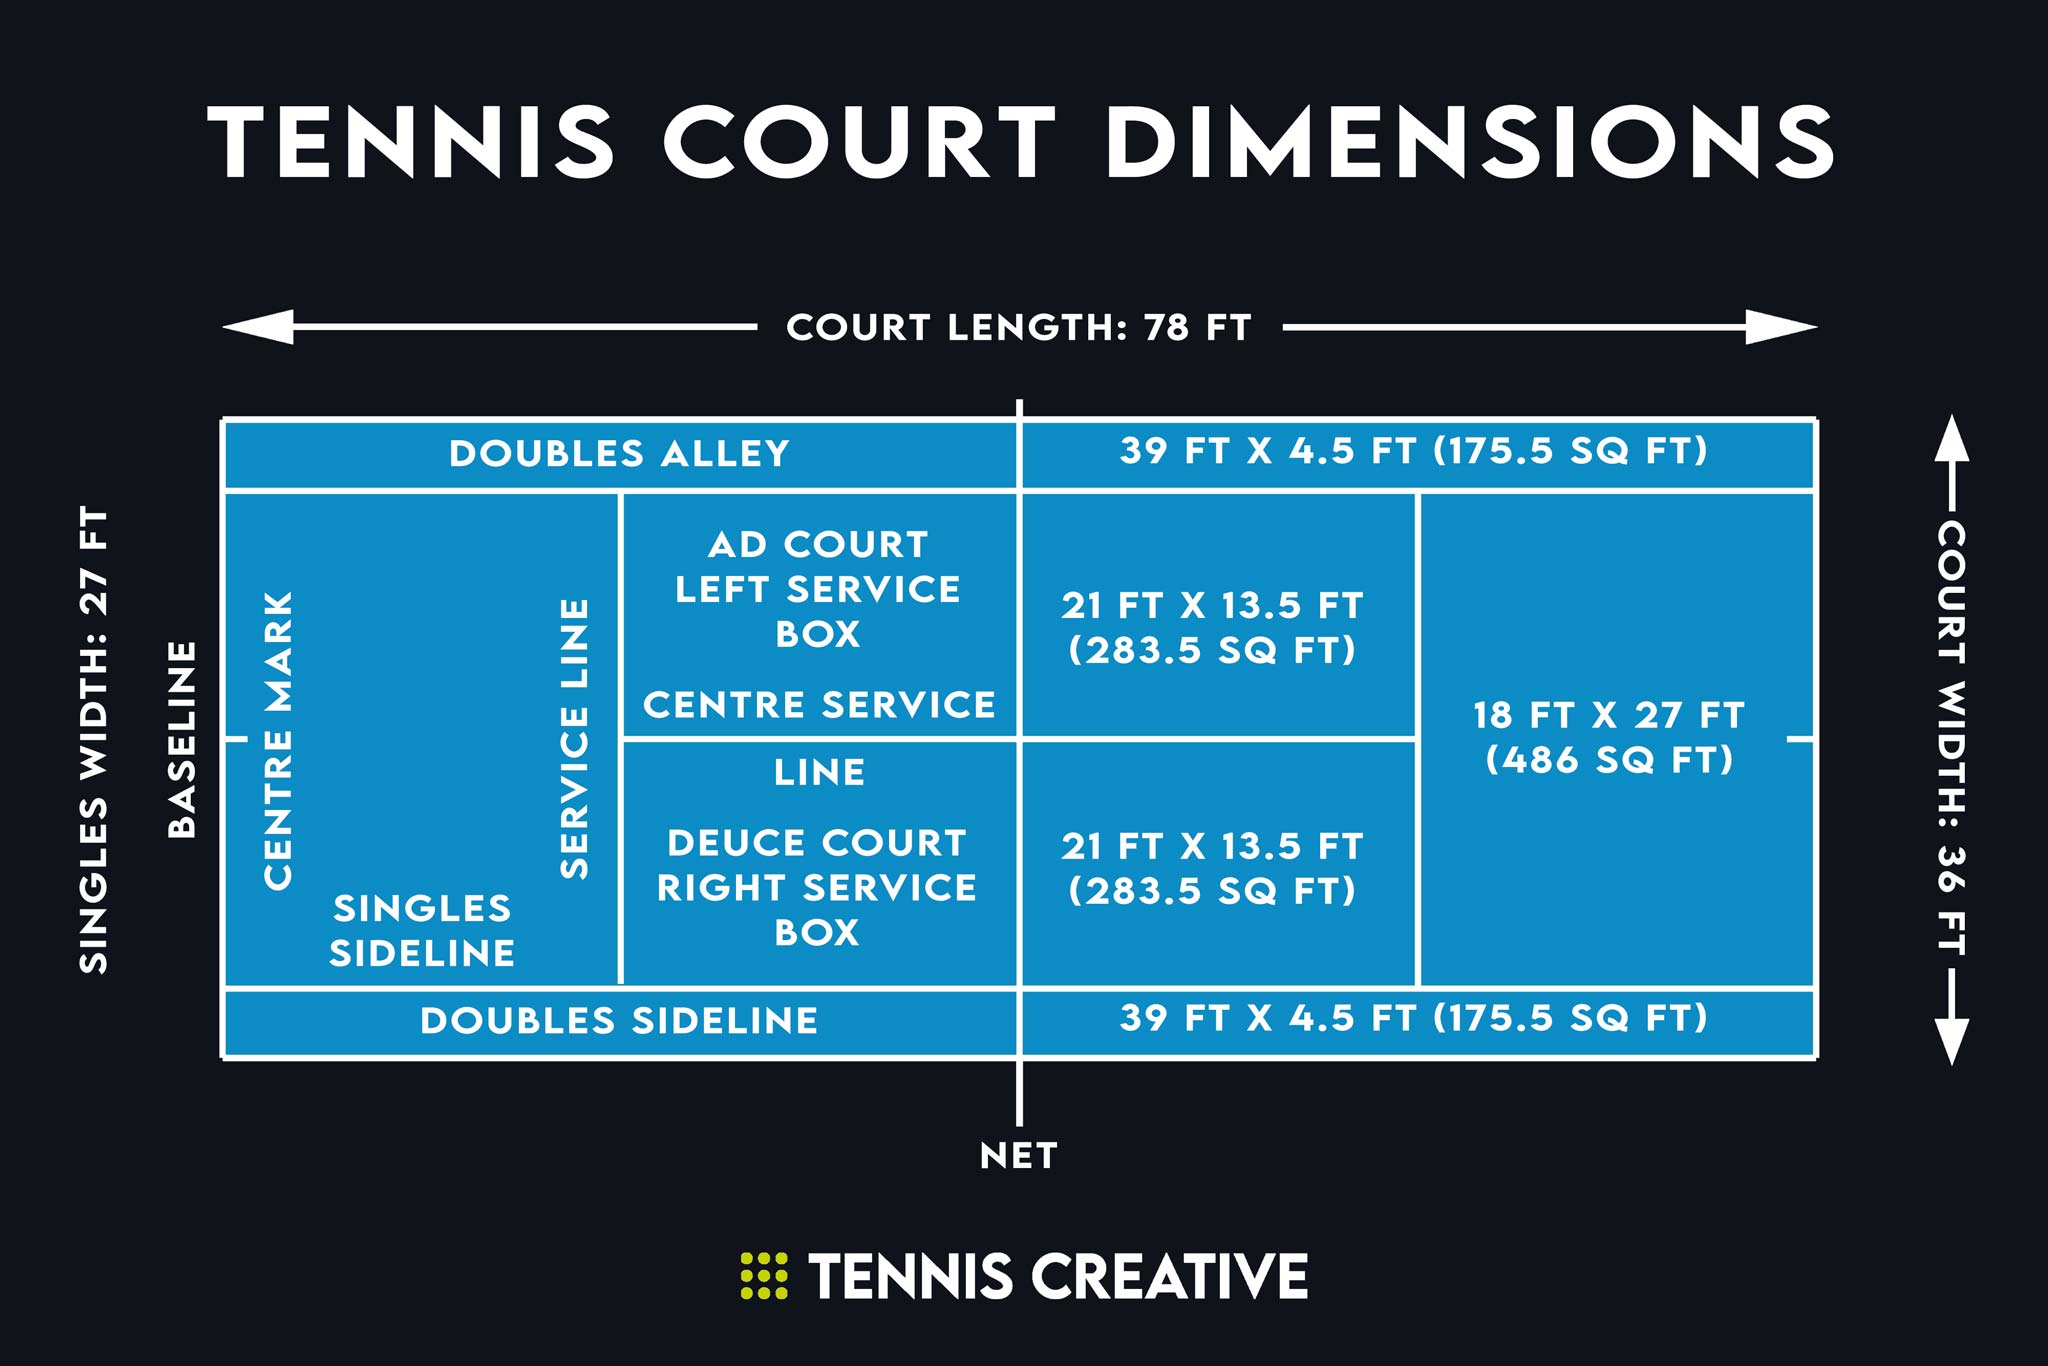 Tennis Court Dimensions How Big is a Tennis Court? Tennis Creative